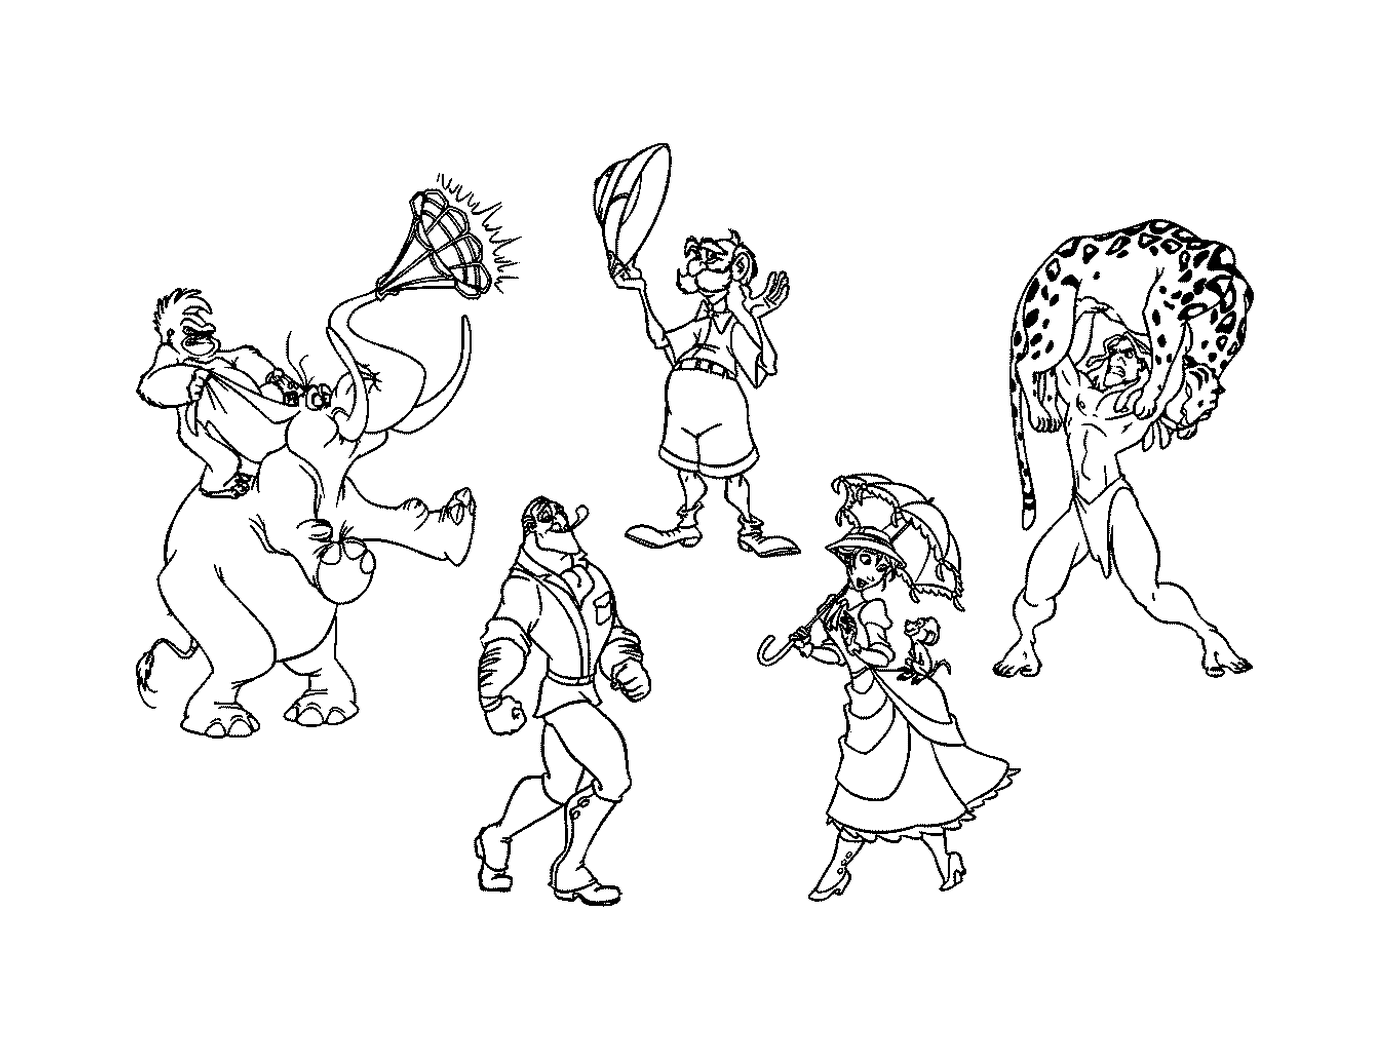  Caricaturas en diferentes poses 